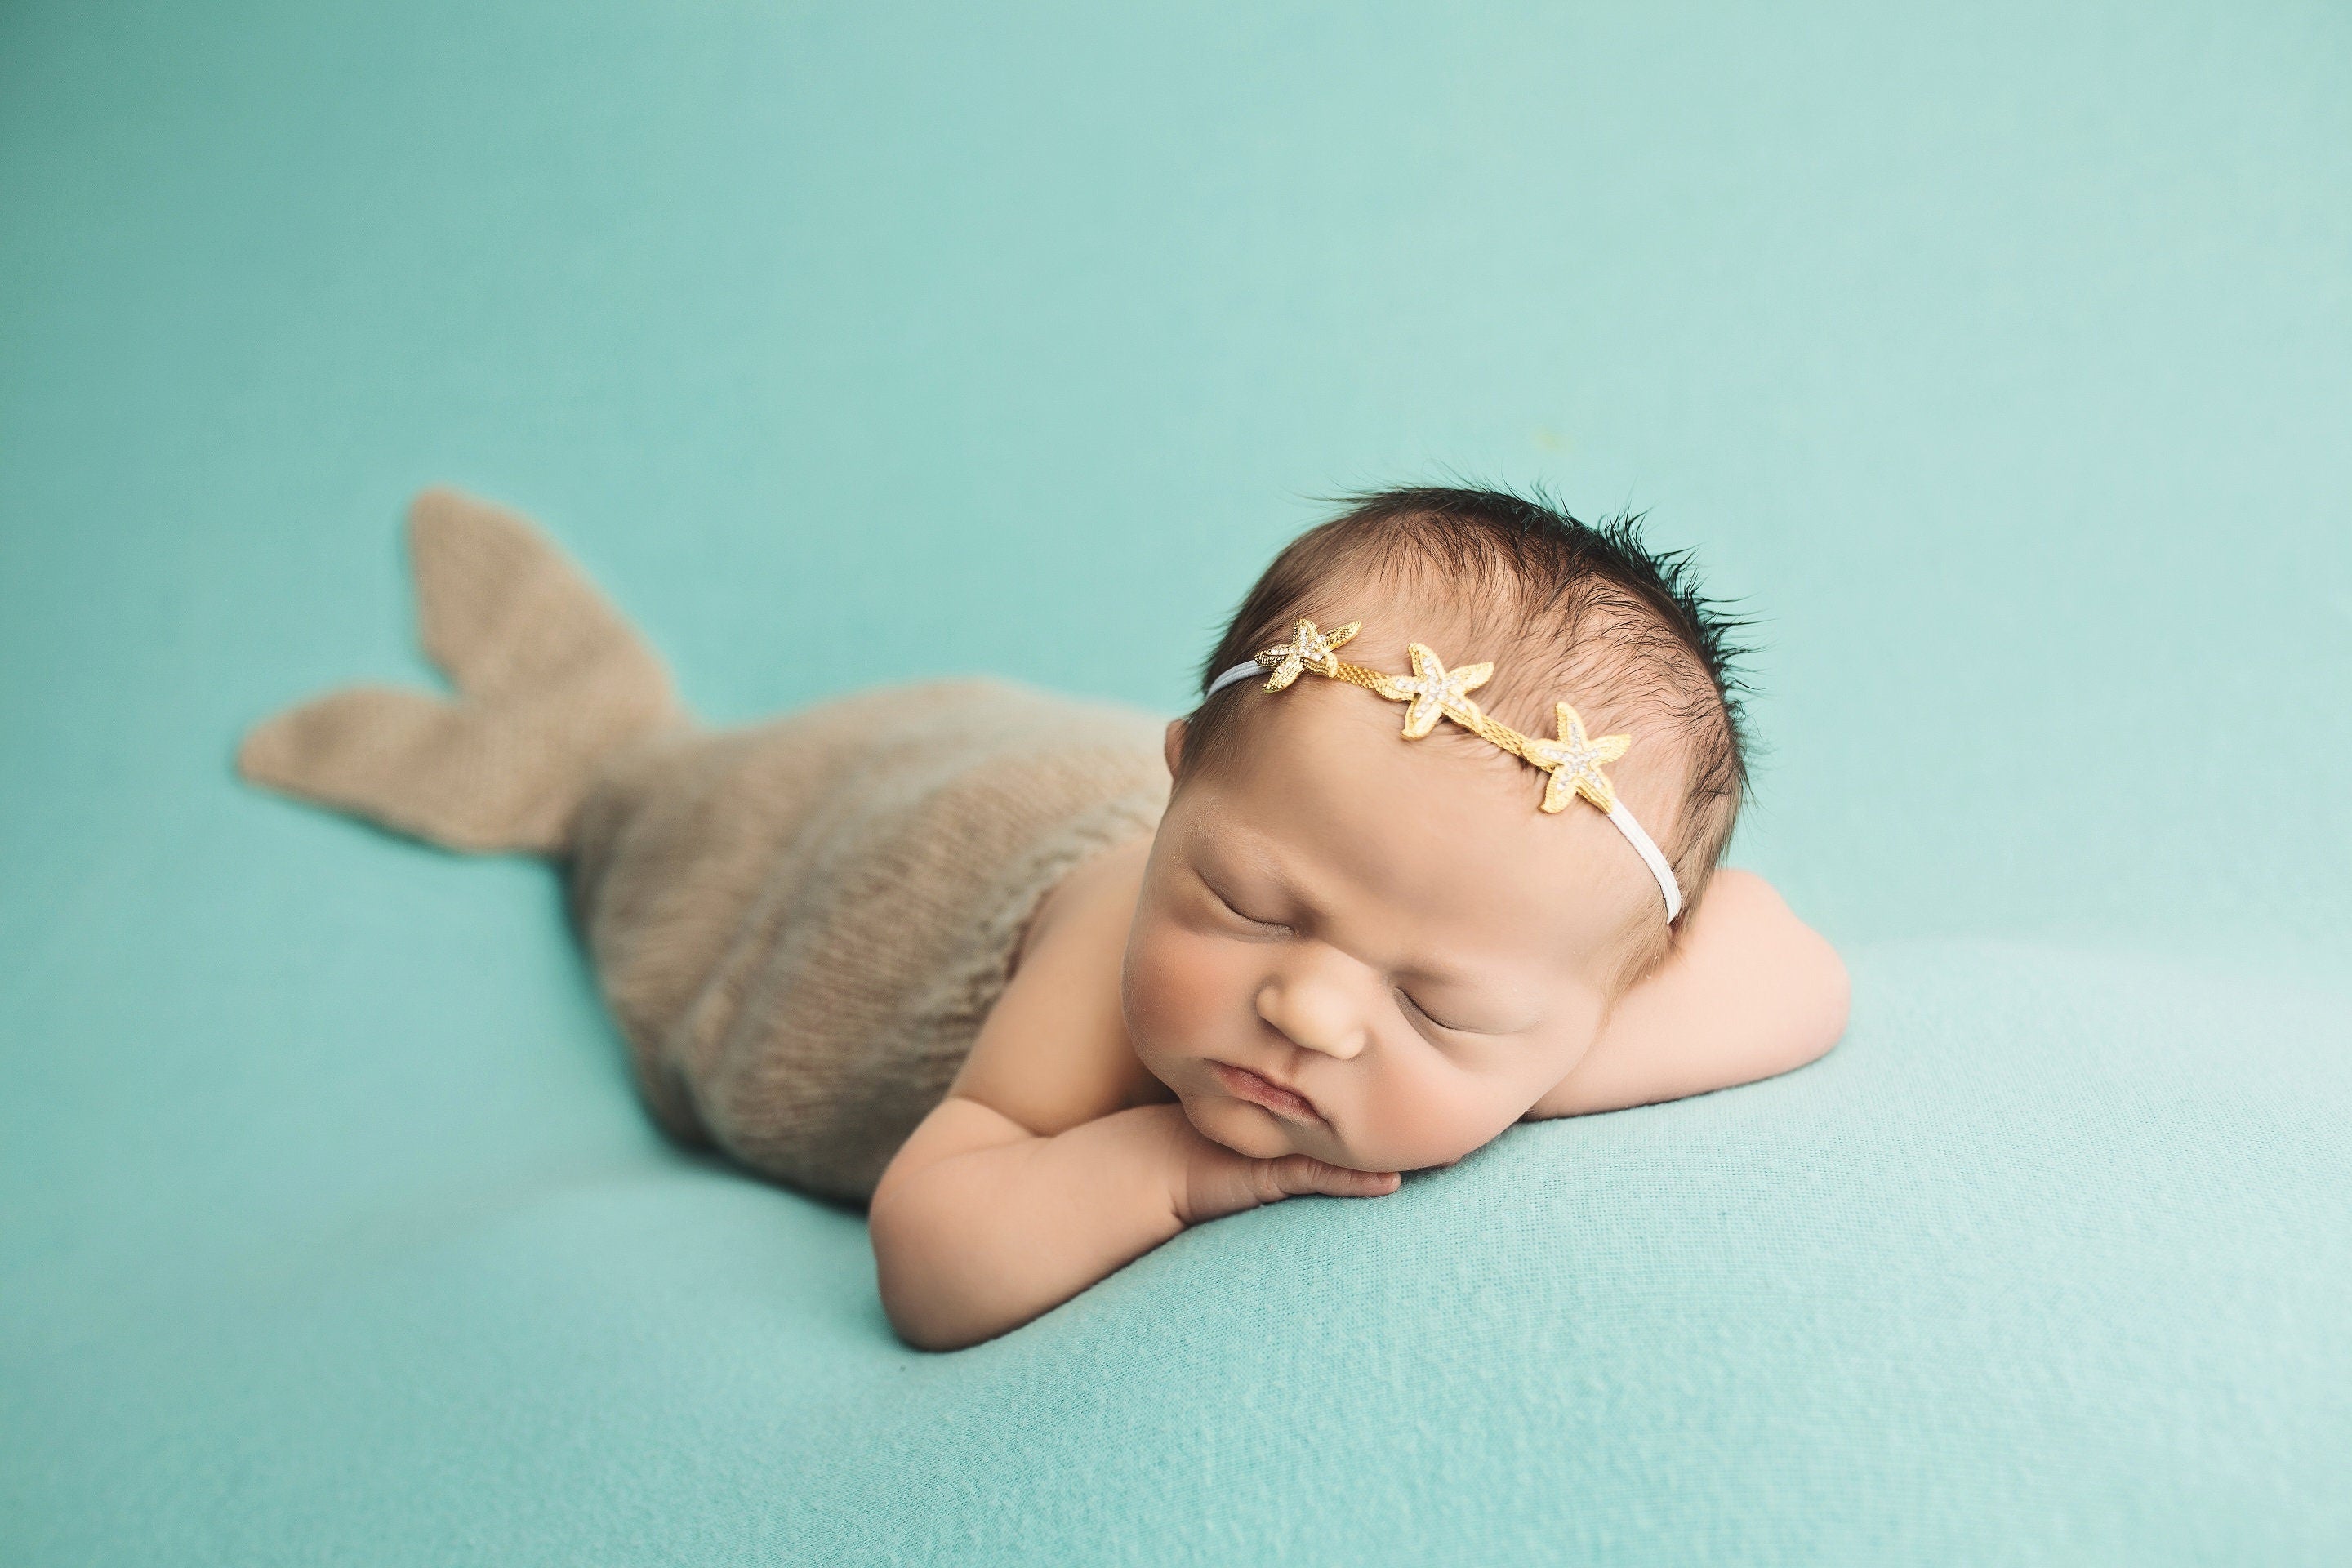 Beige Mermaid Swaddle Sack / Mermaid Photo Prop / Newborn Mermaid Sack / Starfish Tie Back / Newborn Photo Prop / Knit Mermaid Tail / RTS